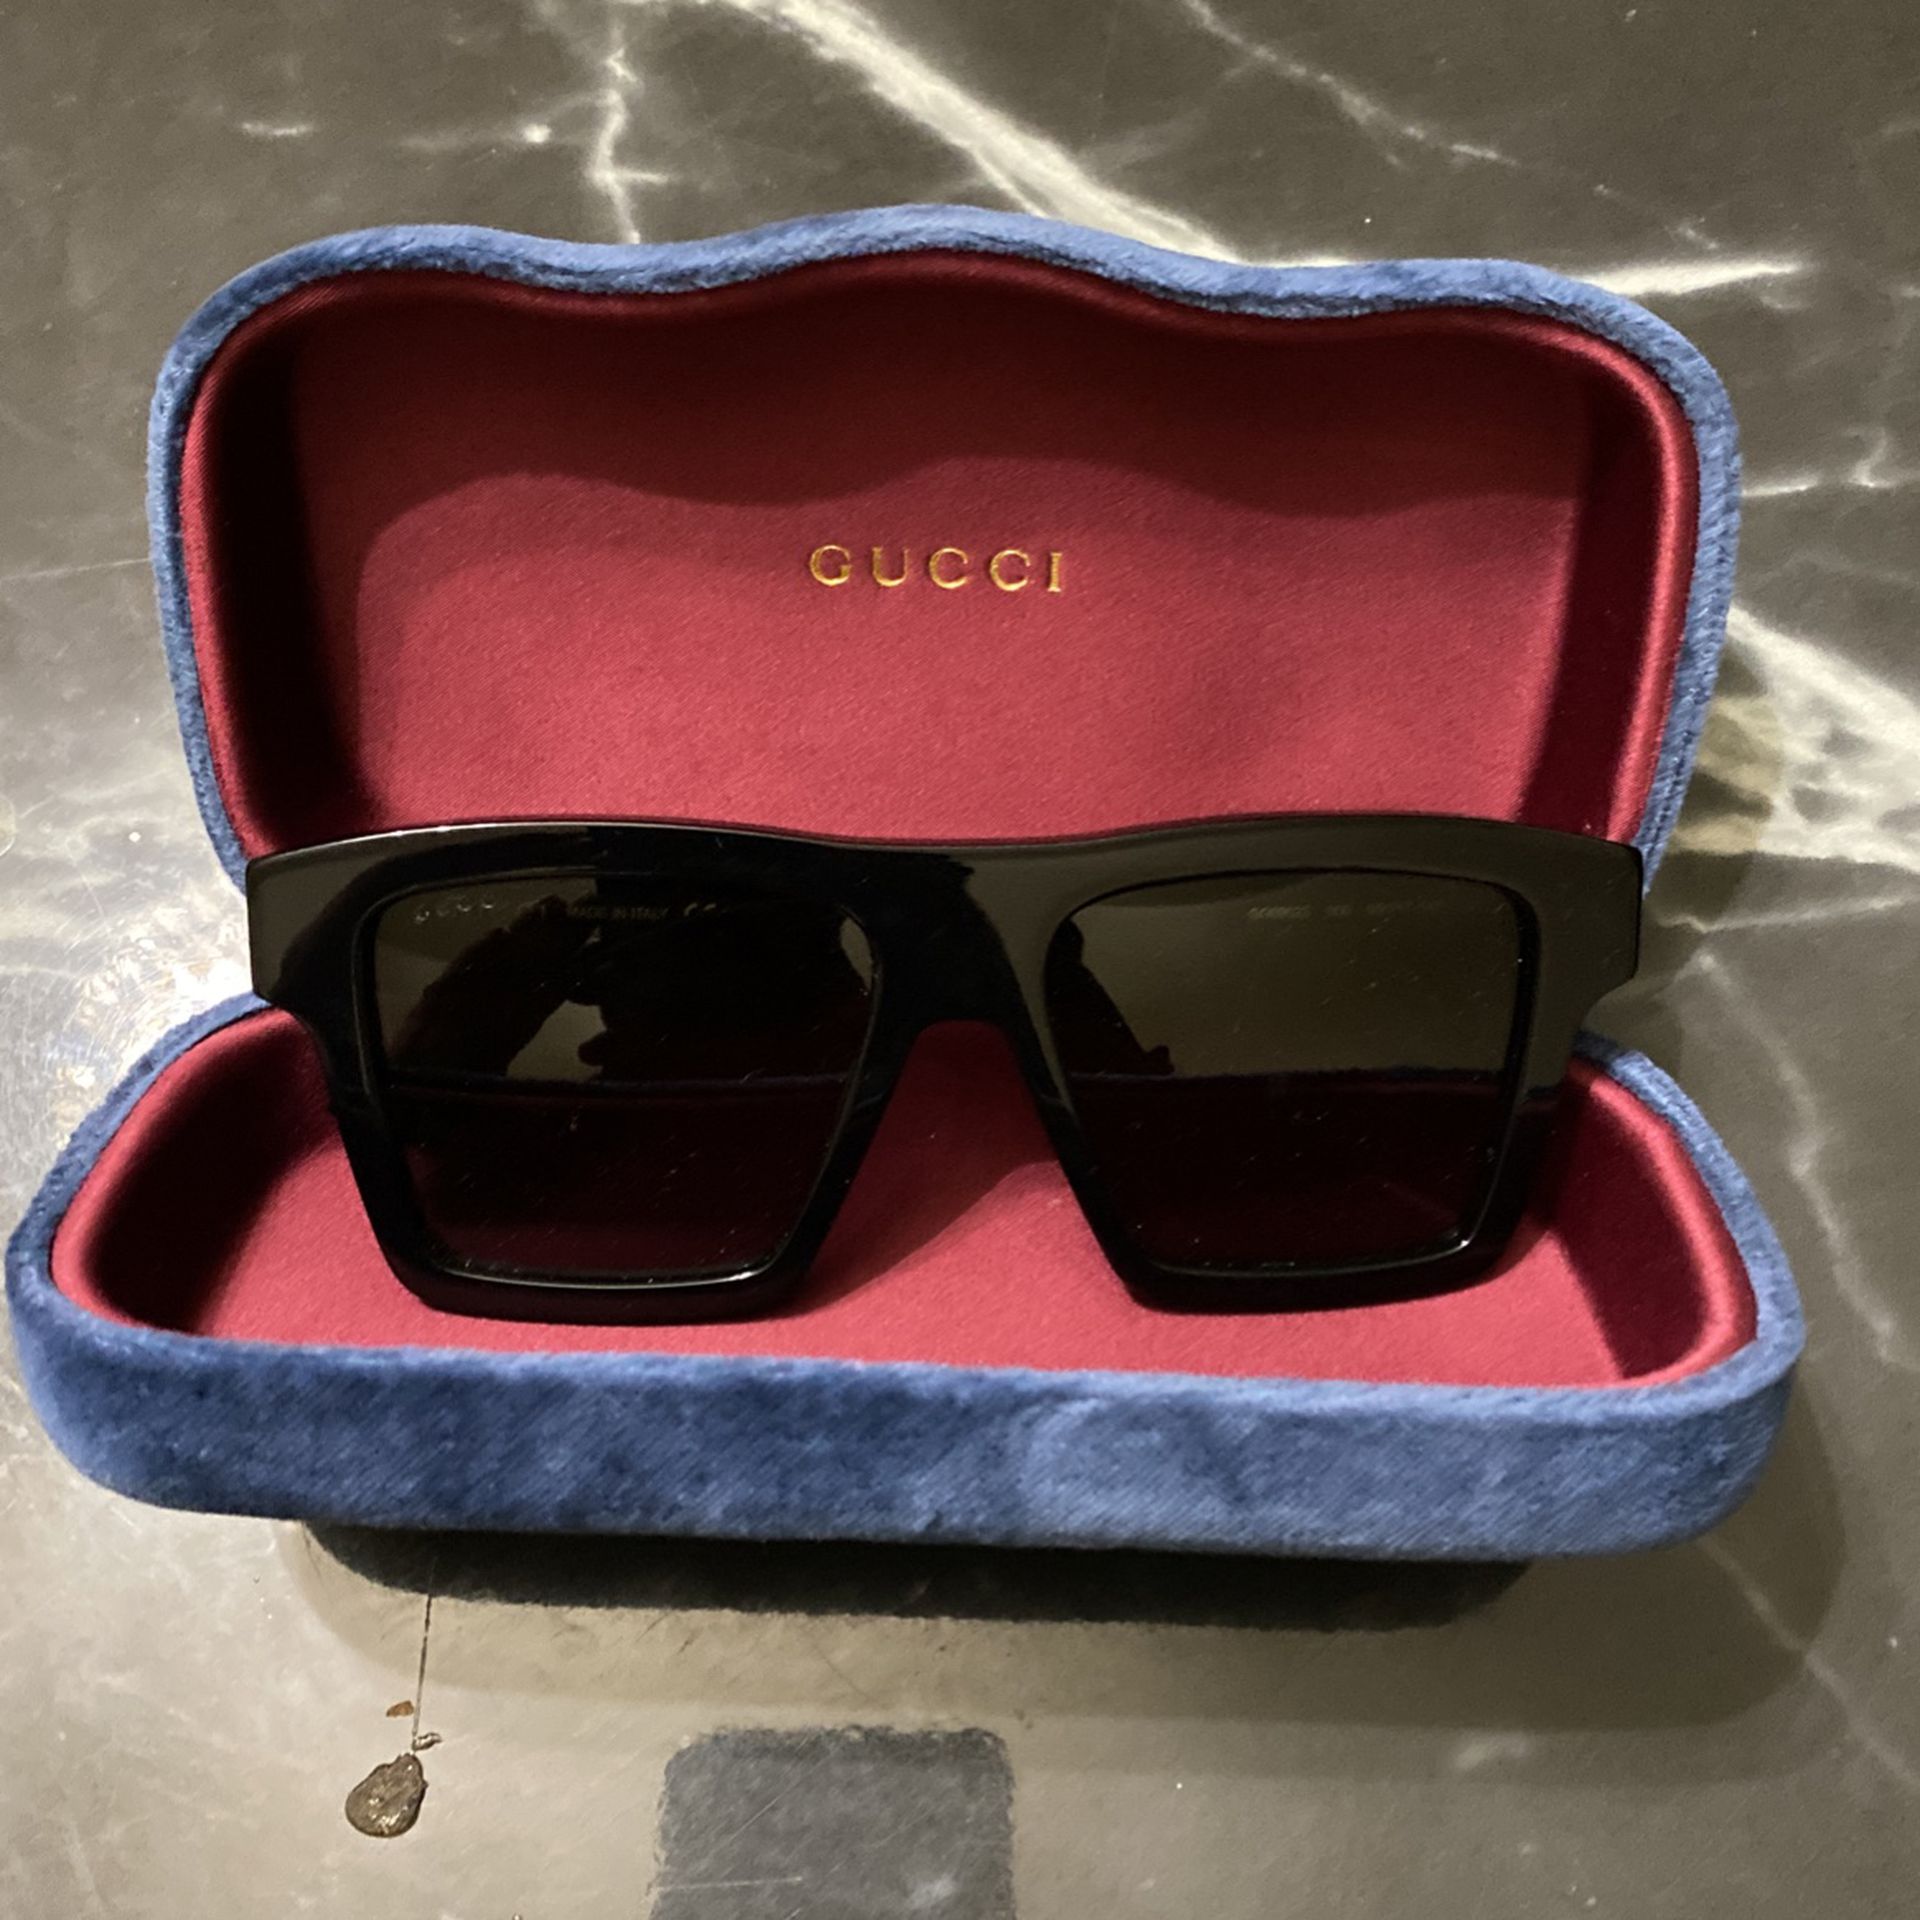 Louis Vuitton Men's Sunglasses for sale in Chicago, Illinois